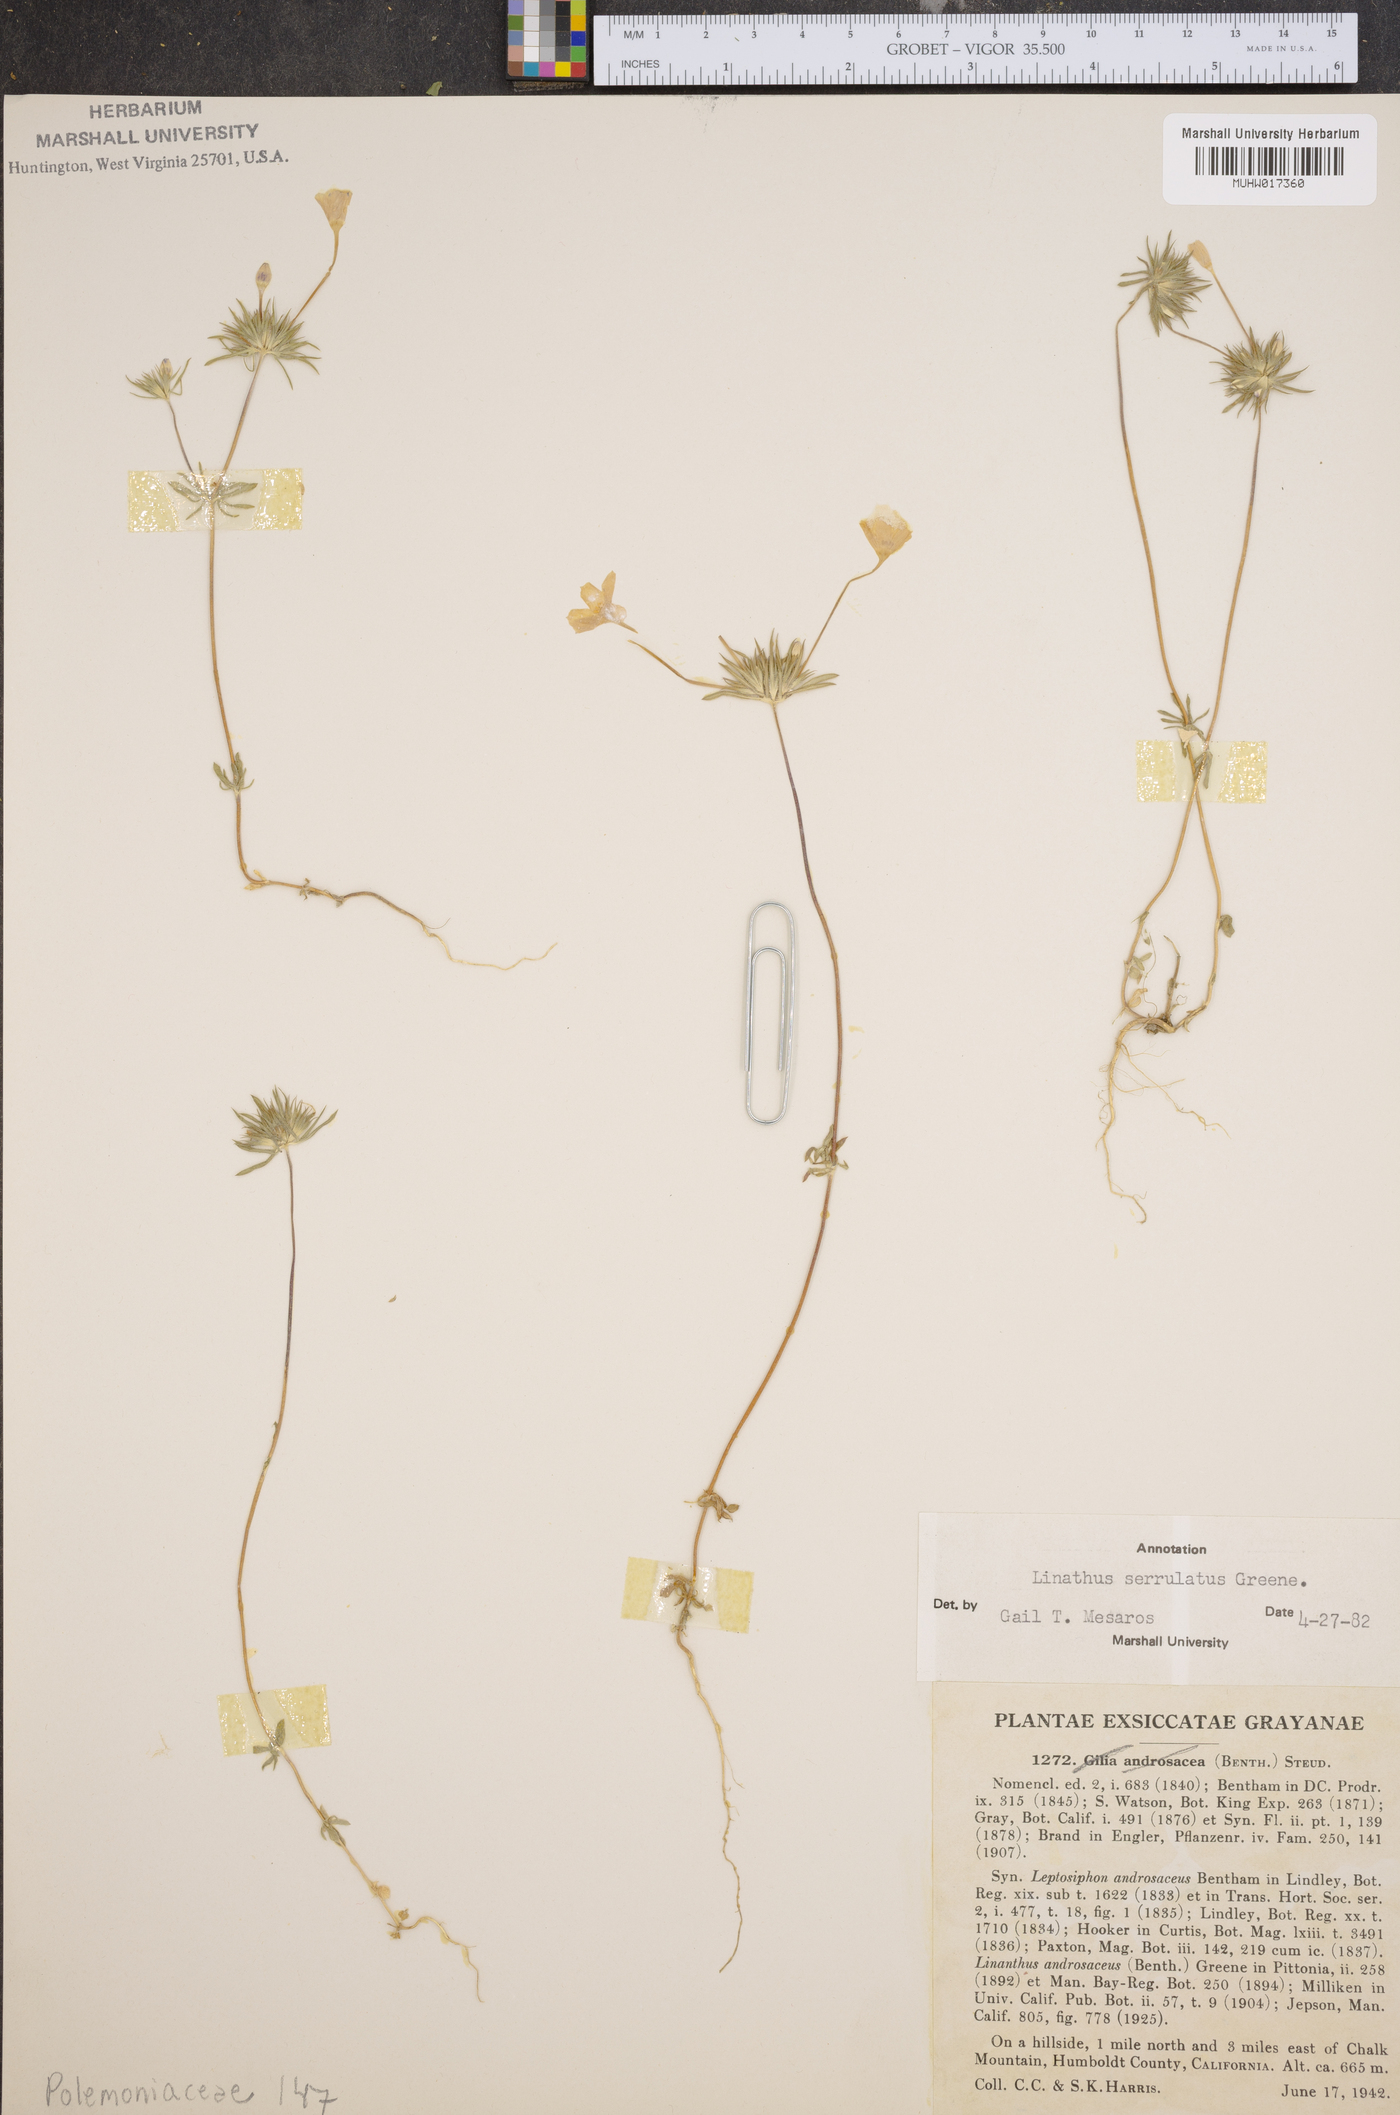 Linanthus serrulatus image